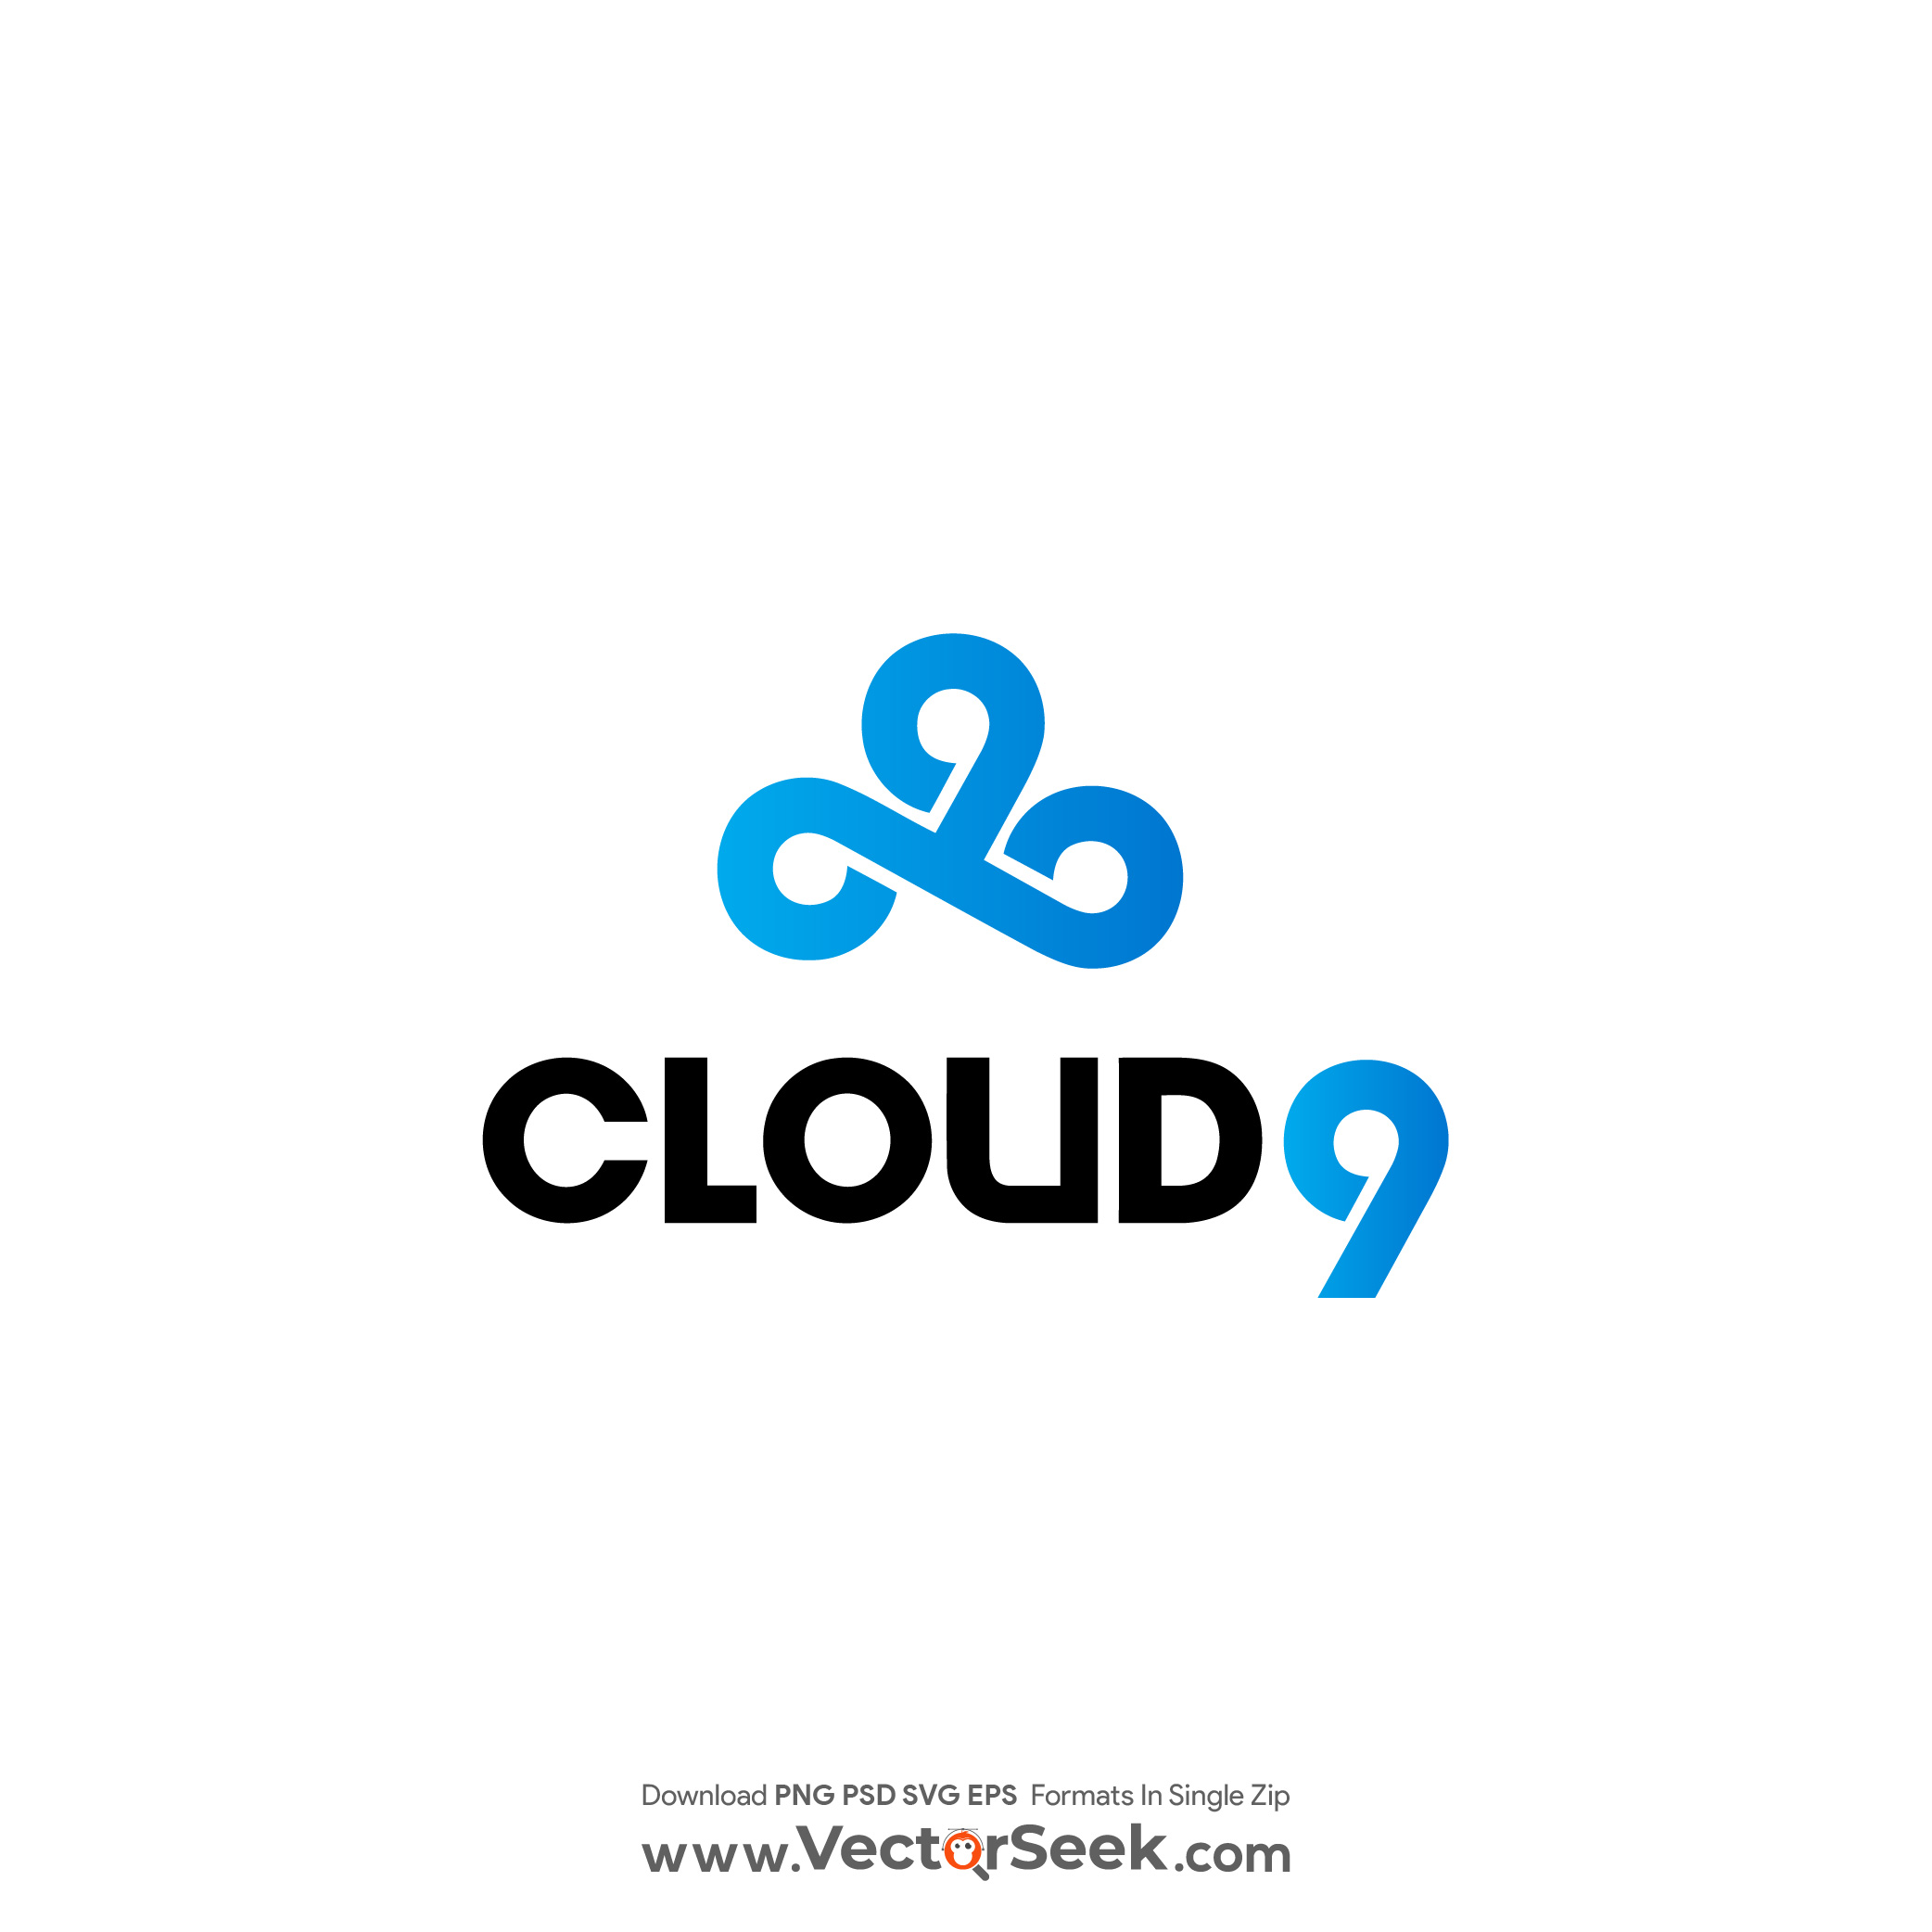 Cloud9 Logo Vector